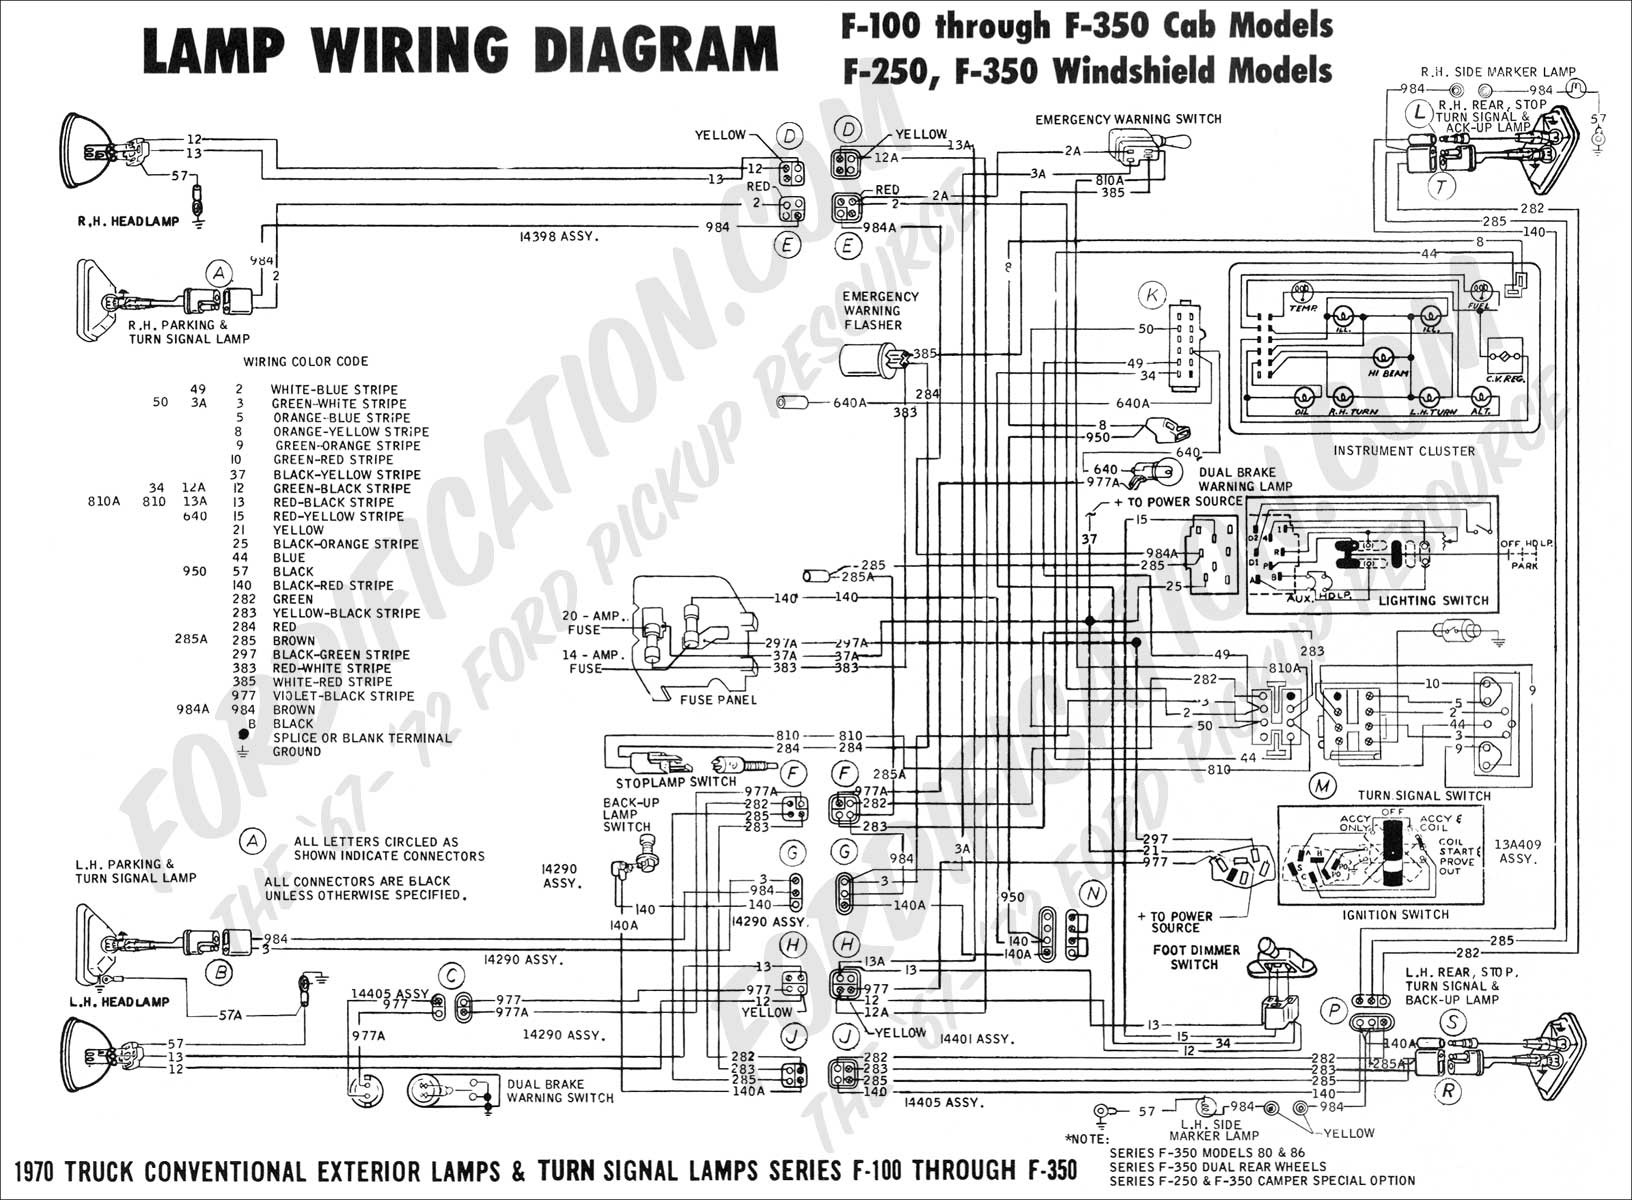 2013 ford F150 Wiring Diagram 1996 ford F 350 Wiring Wiring Info • Of 2013 ford F150 Wiring Diagram